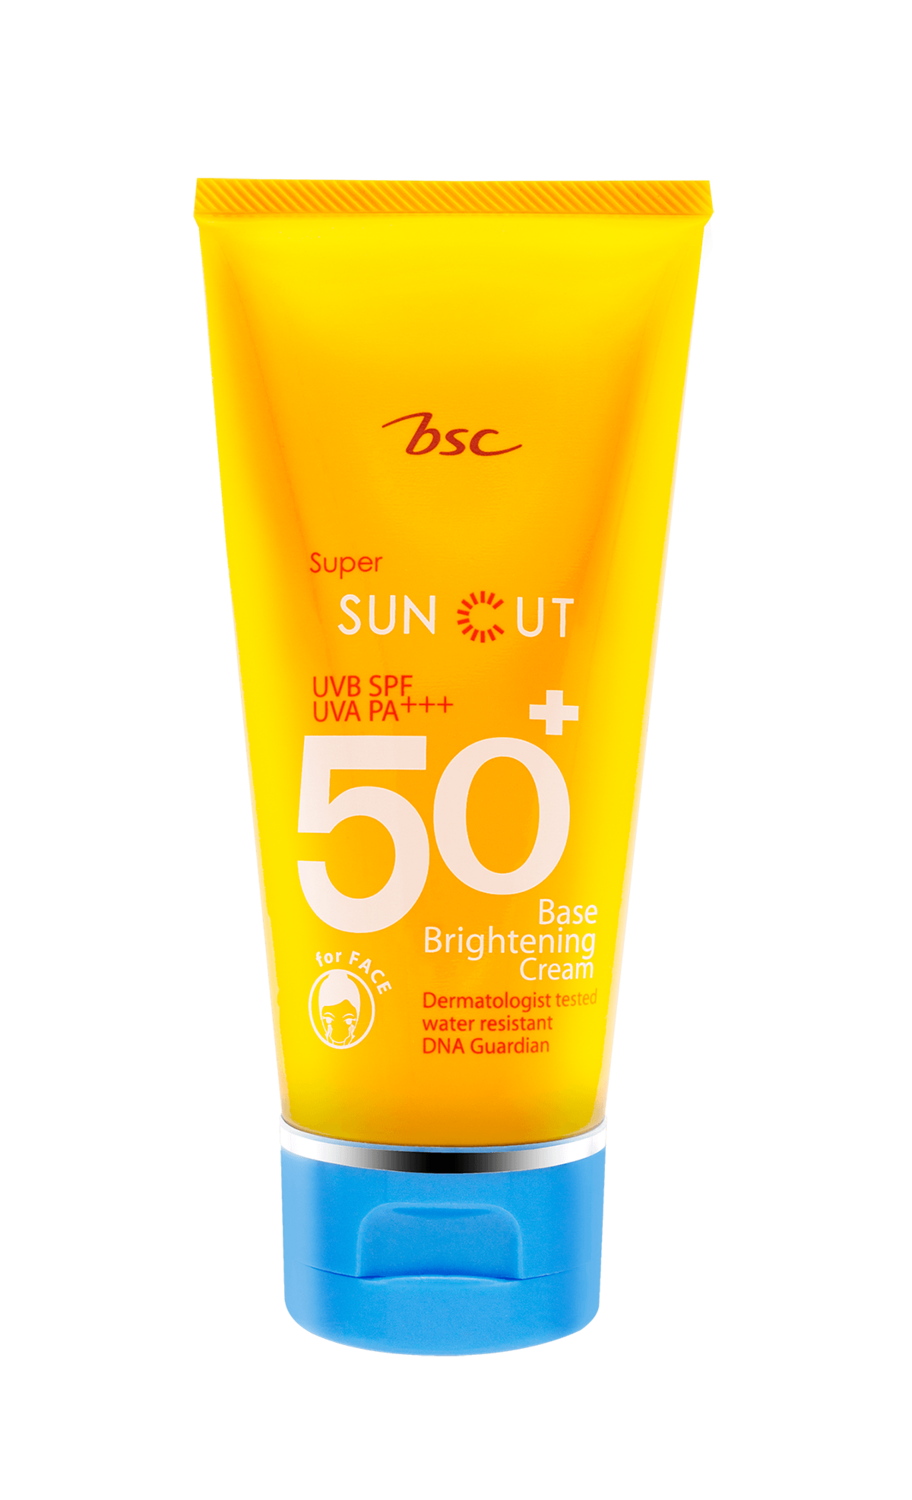 BSC SUPER SUN CUT PROTECTION BASE BRIGHTENING CREAM SPF50 PA+++